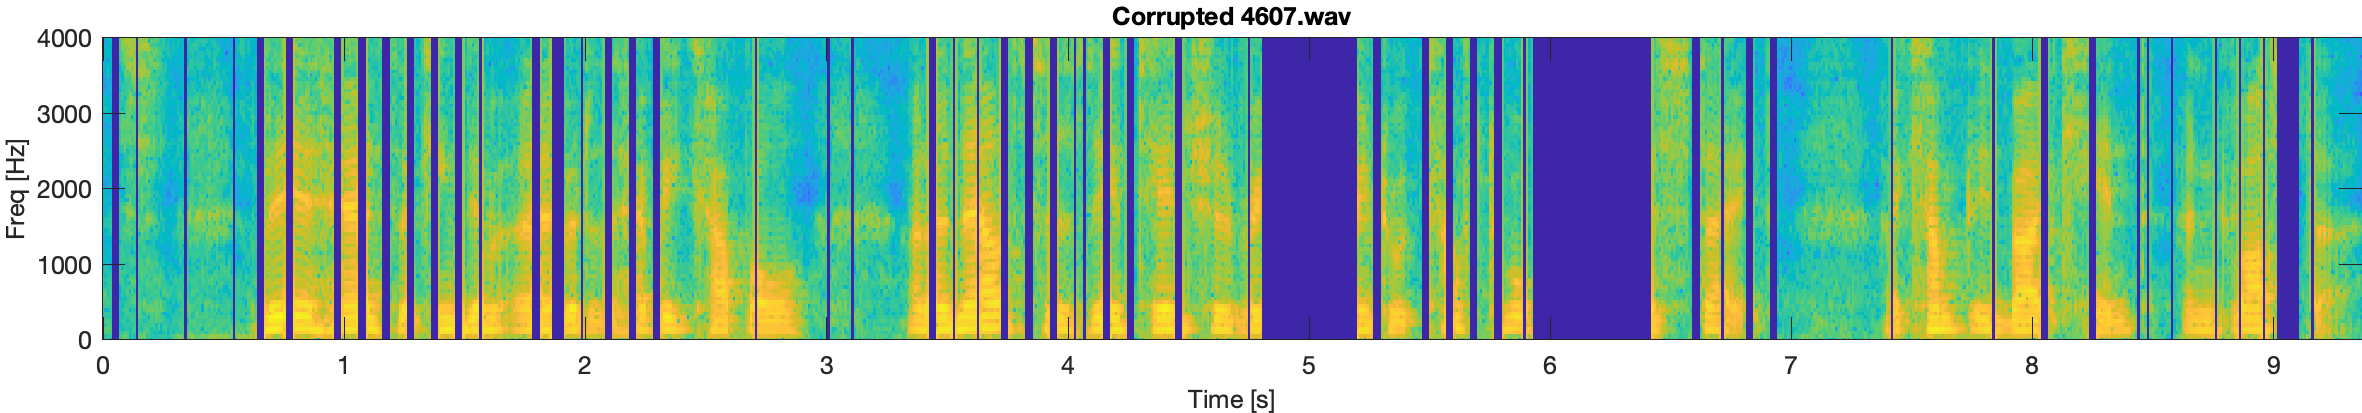 Corrupted spectrogram 4607.wav